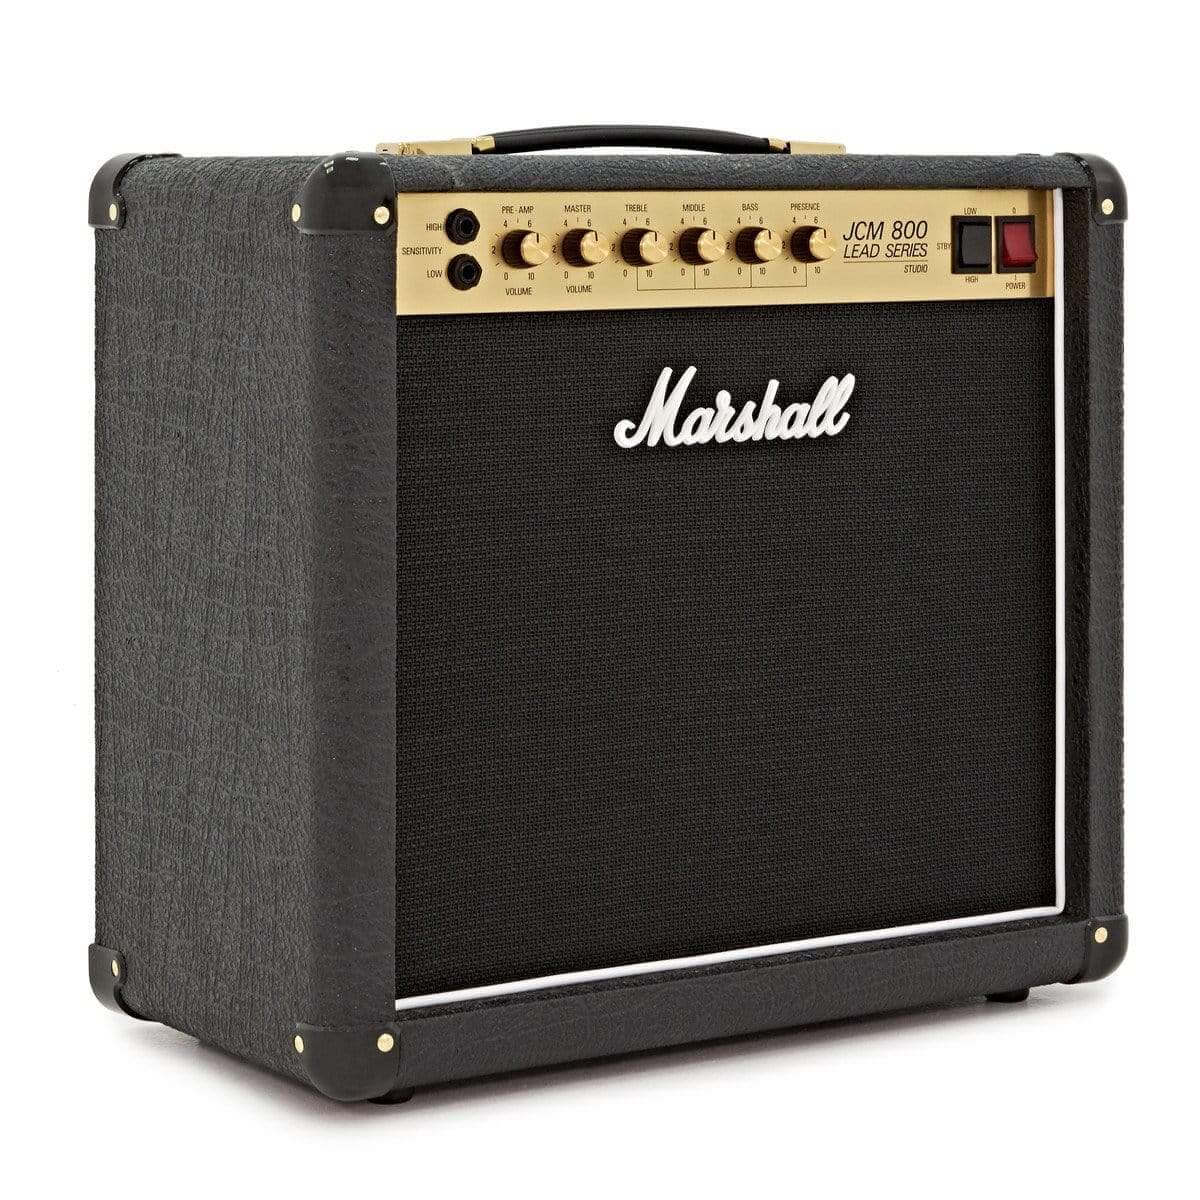 Marshall Amplifier Marshall SC20C 20W VALVE AMP COMBO